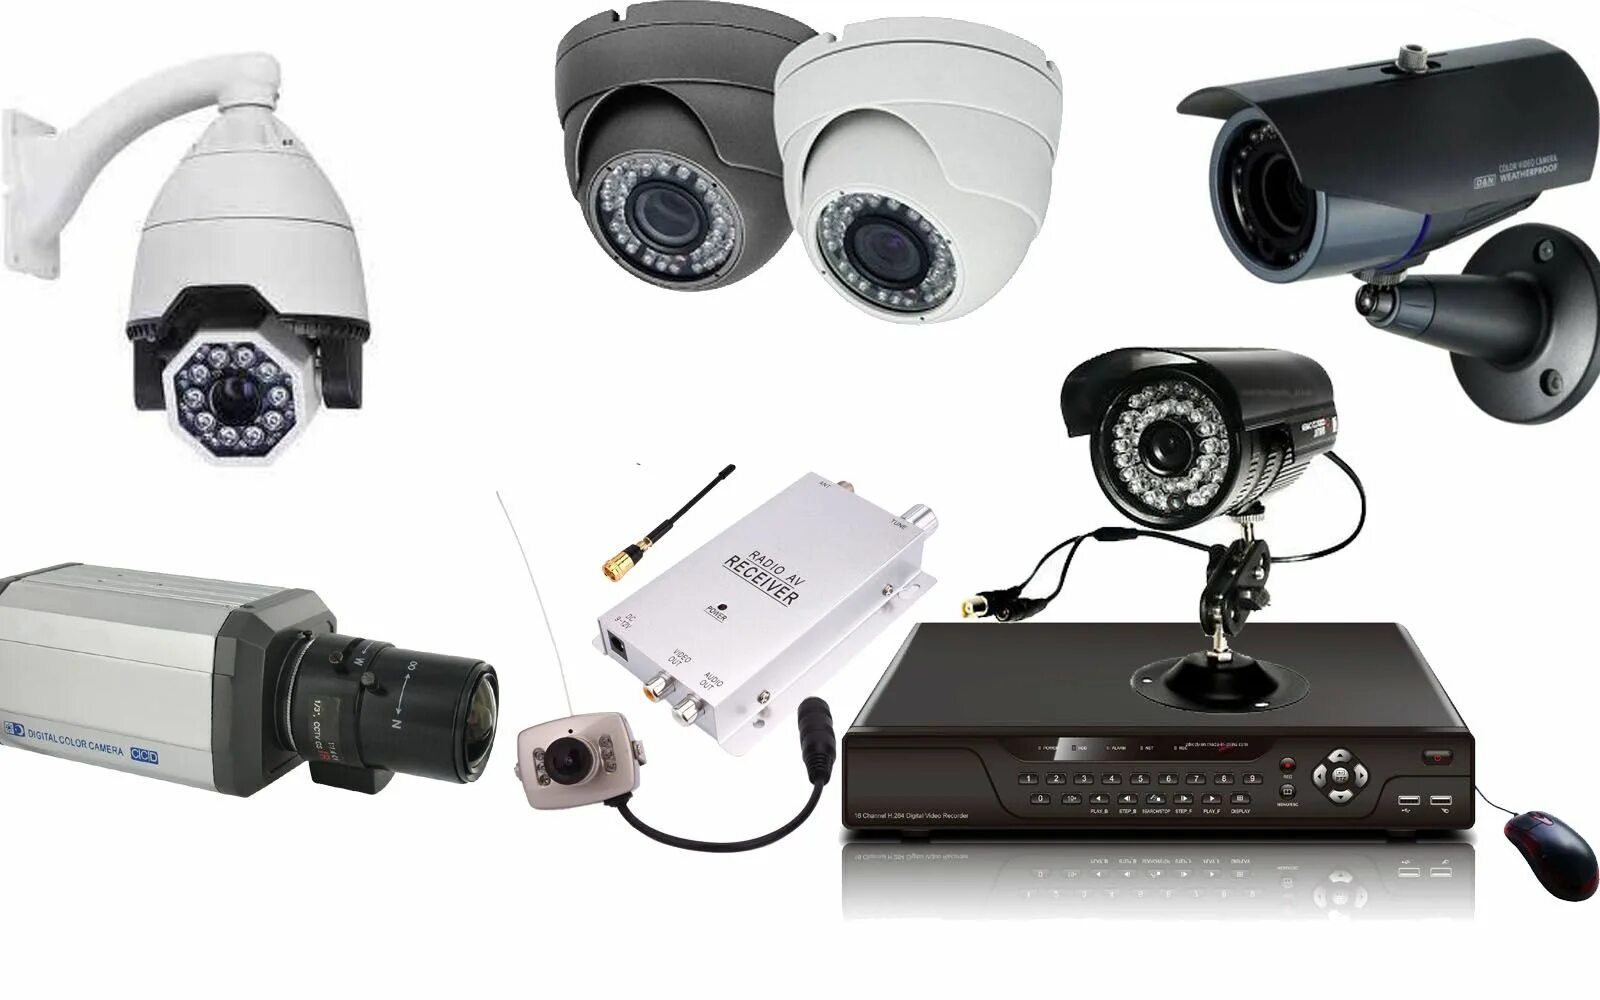 Risui cam. IP CCTV камера. Камера видеонаблюдения nc213vir. Камера CCTV ACECOP ACV 100afzt. Камера видеонаблюдения KDM-6202n.